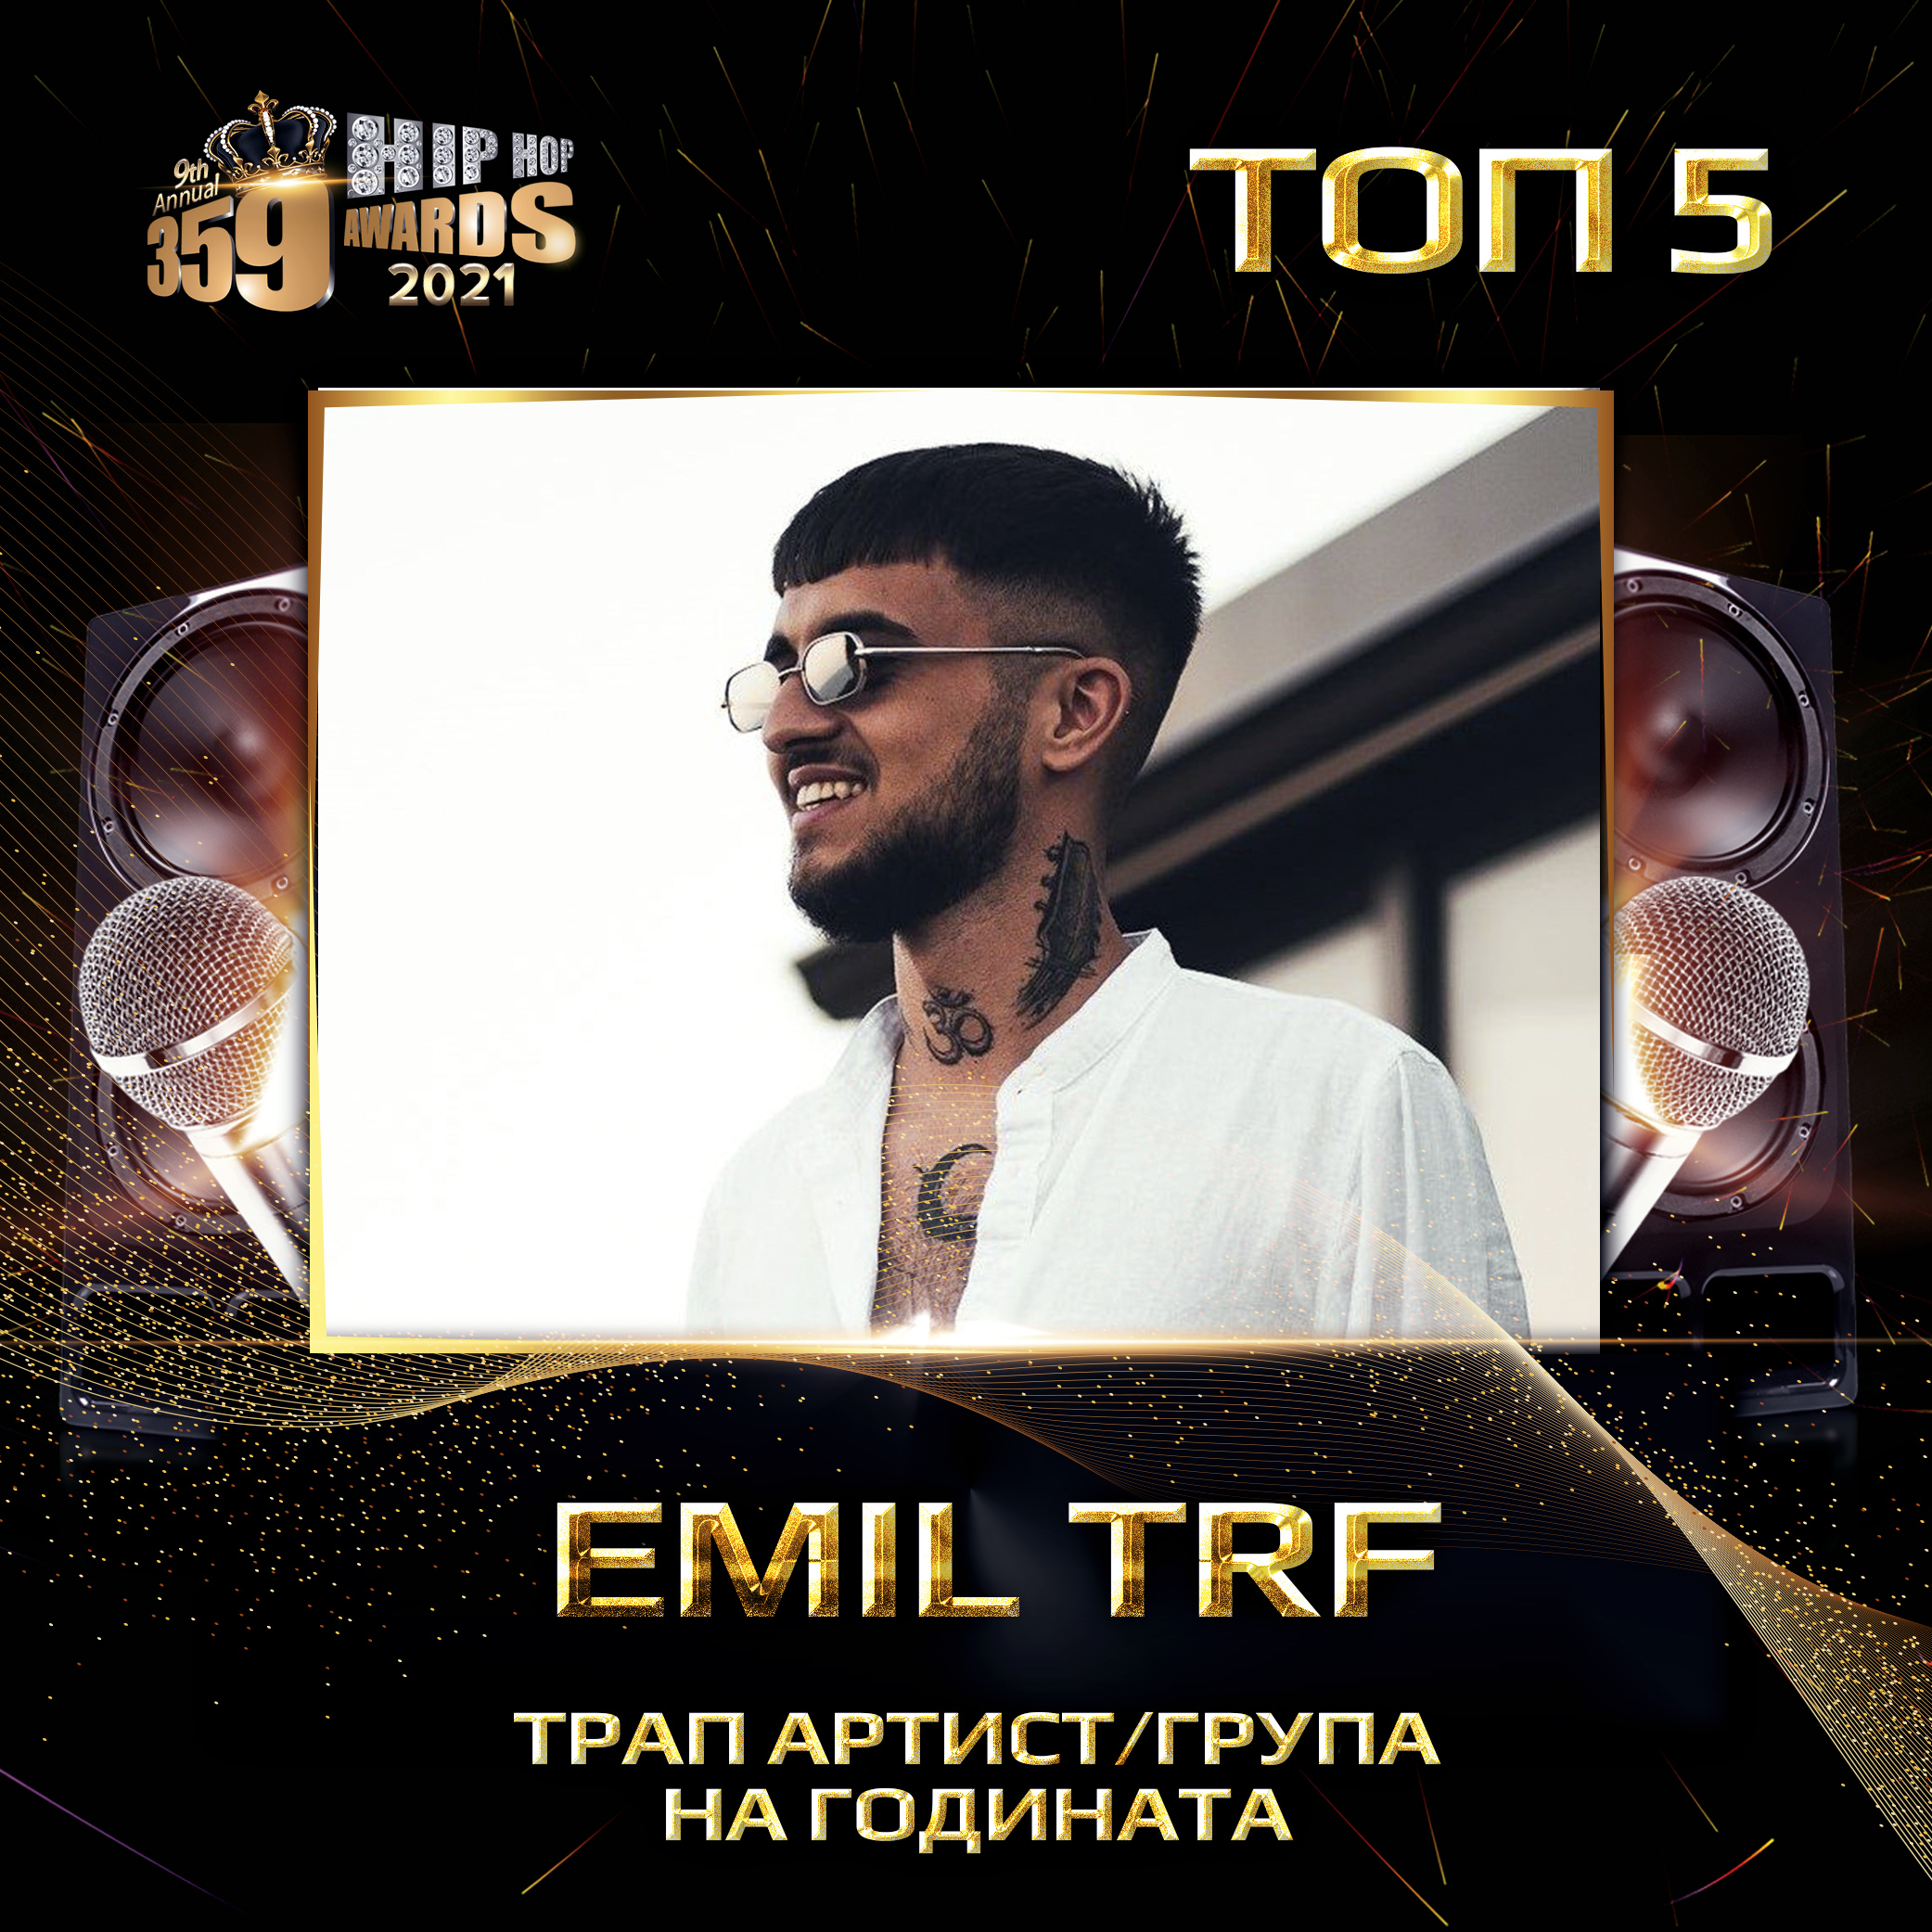 top 5  359 awards 2021 trap artist grupa  emil trf - Най-добър трап артист/група 2020